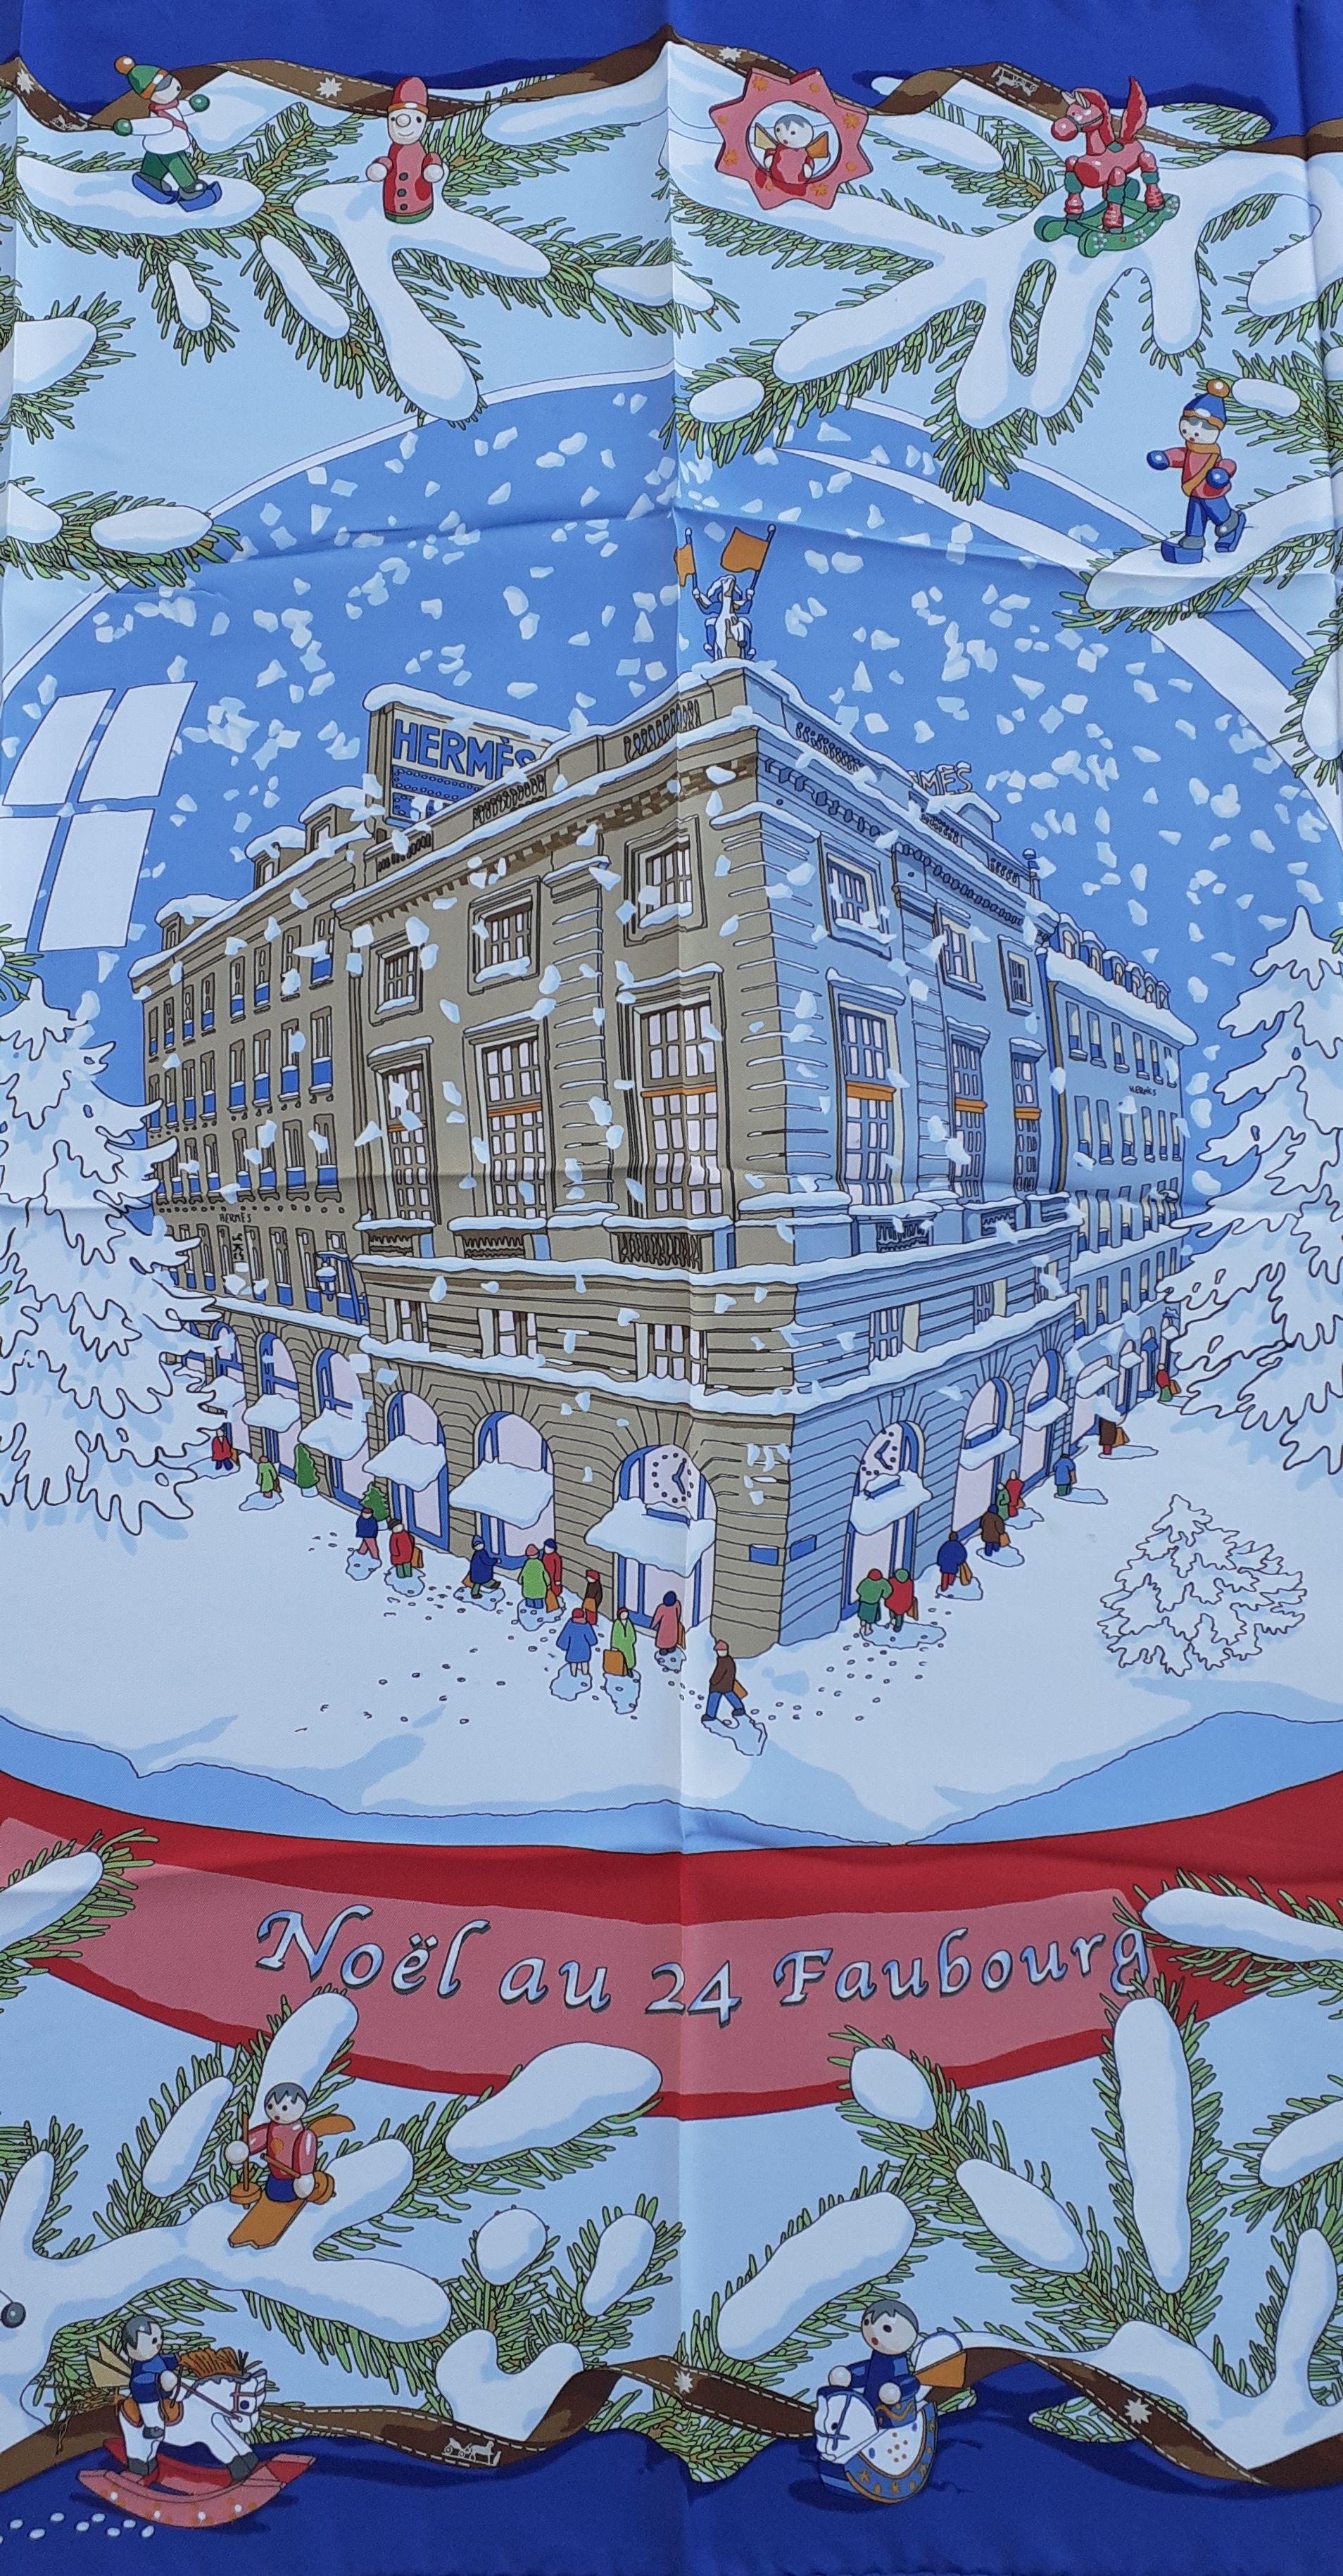 Women's Hermès Silk Scarf Noel au 24 Faubourg Christmas Snow Ball Blue 35'